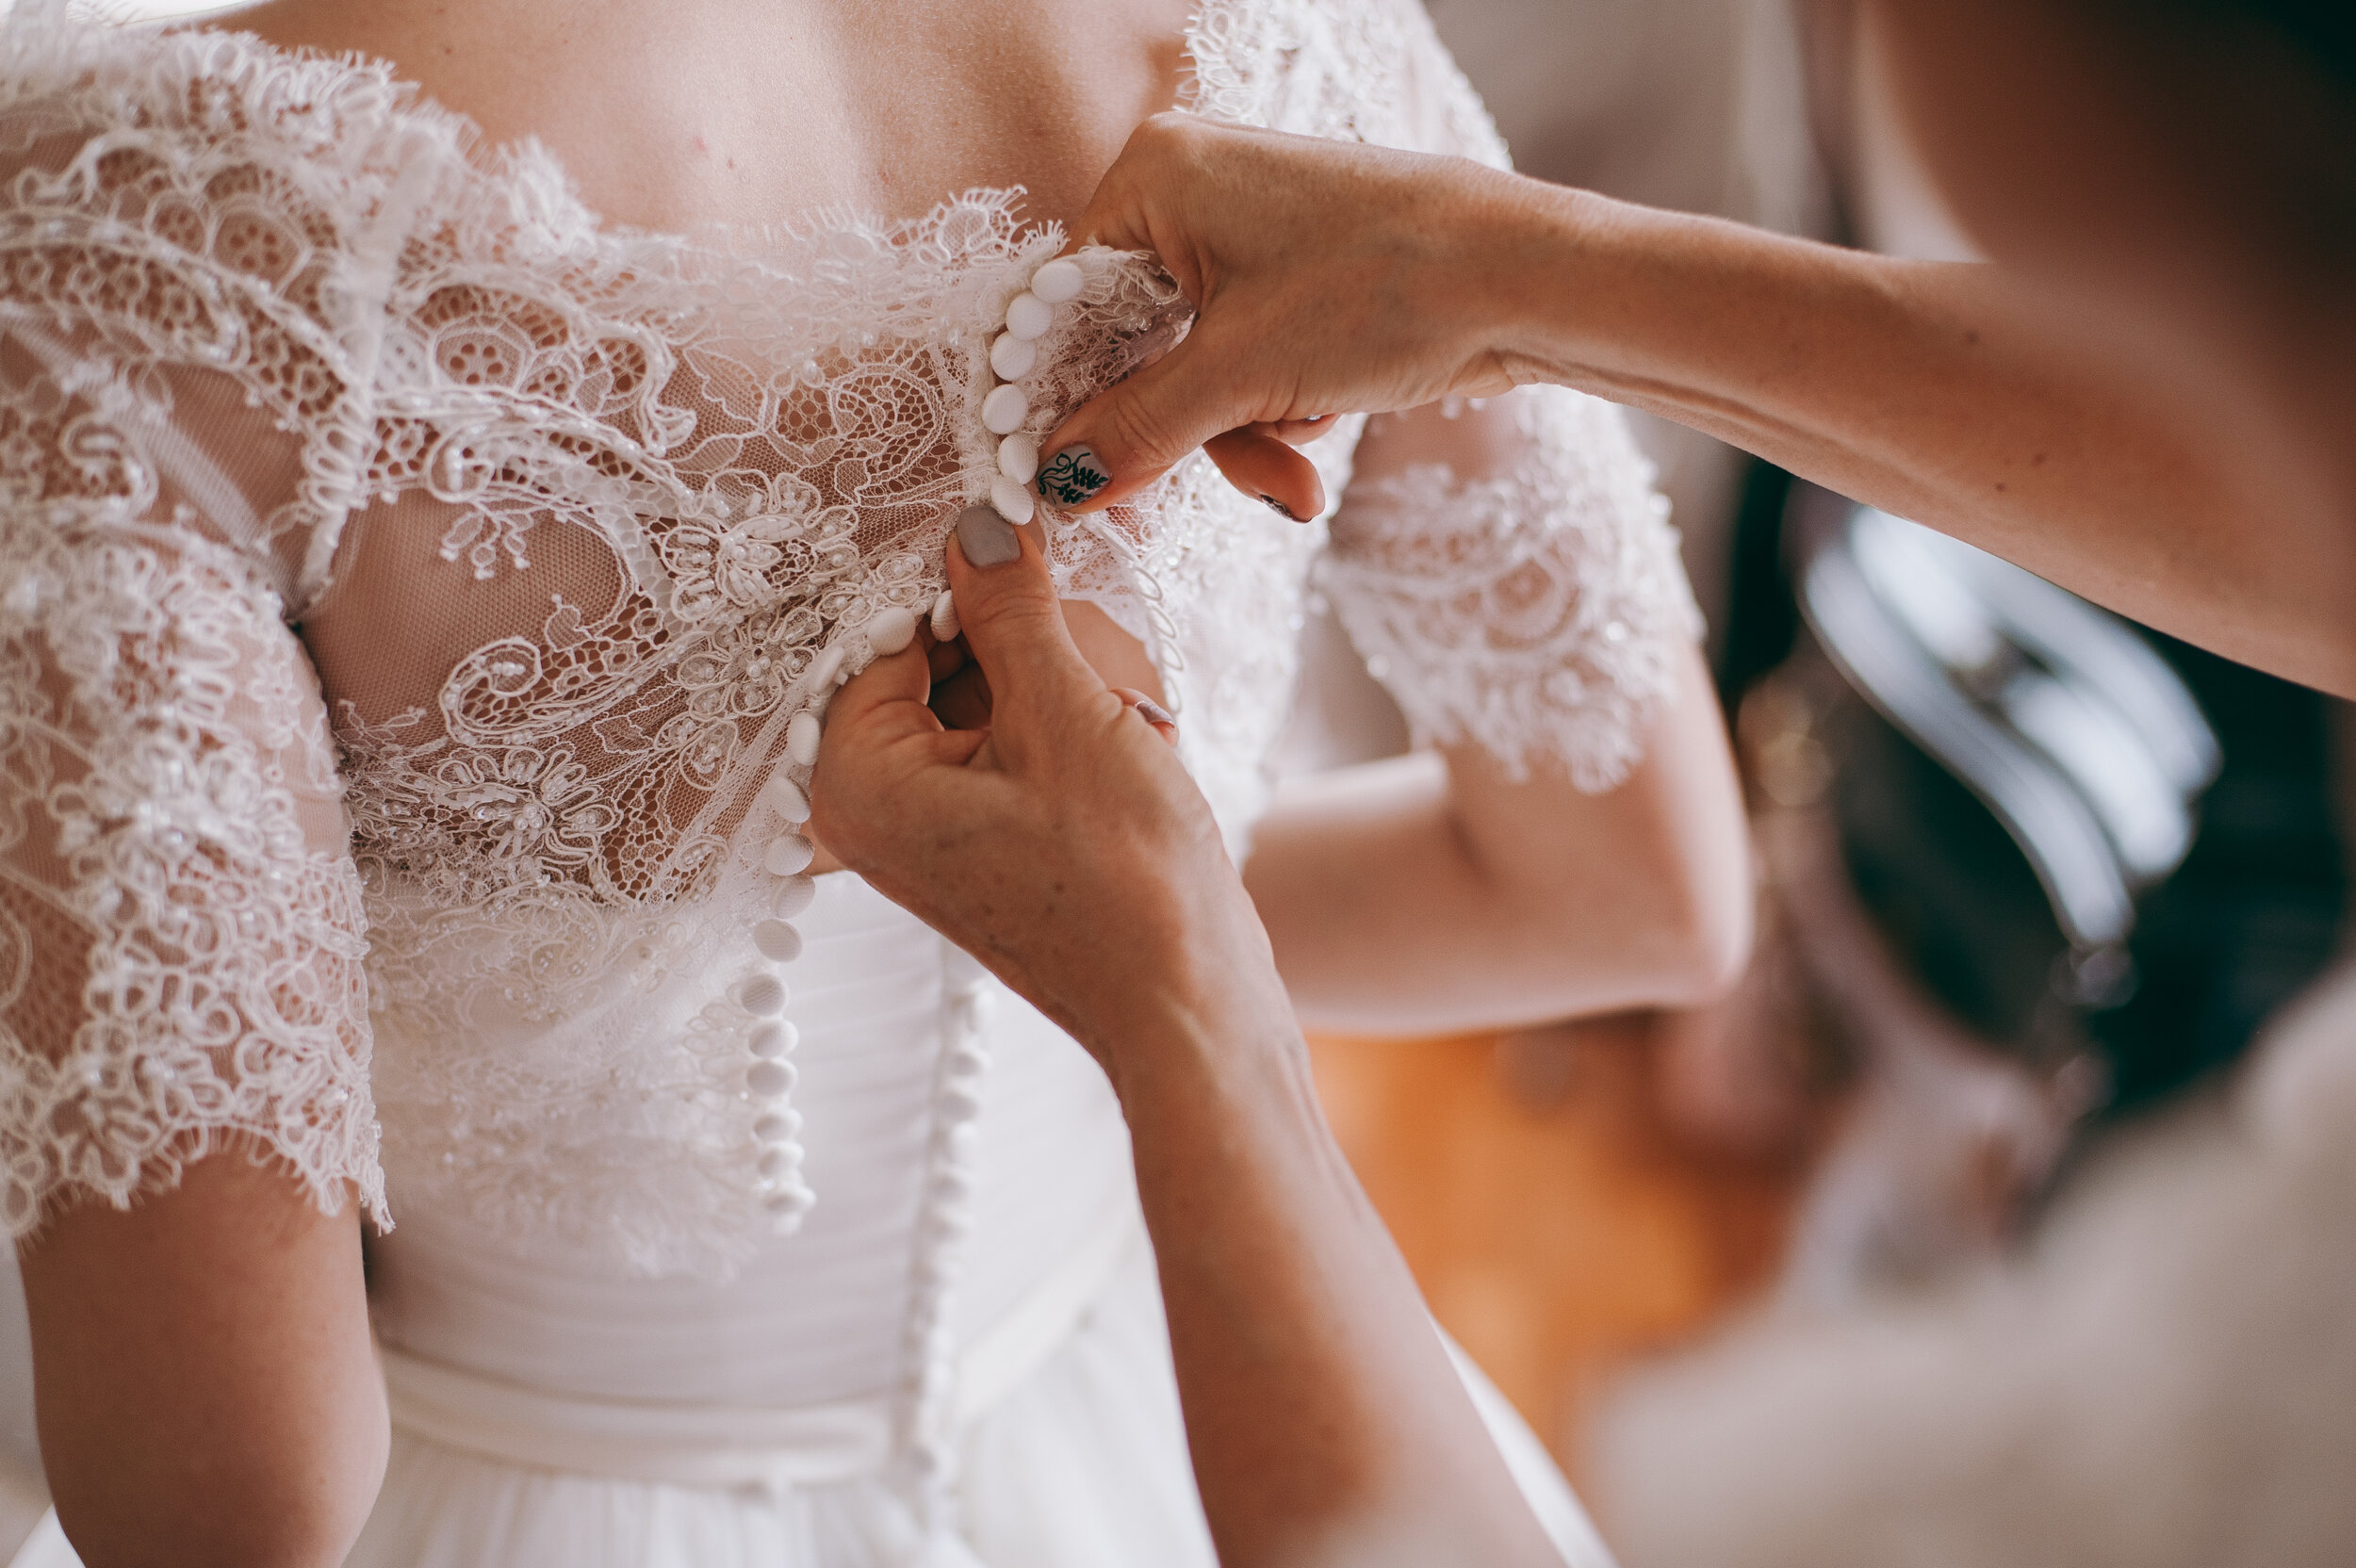 Fashionable Bridesmaids Dresses Helped Wear Bow On Back Of Weddi